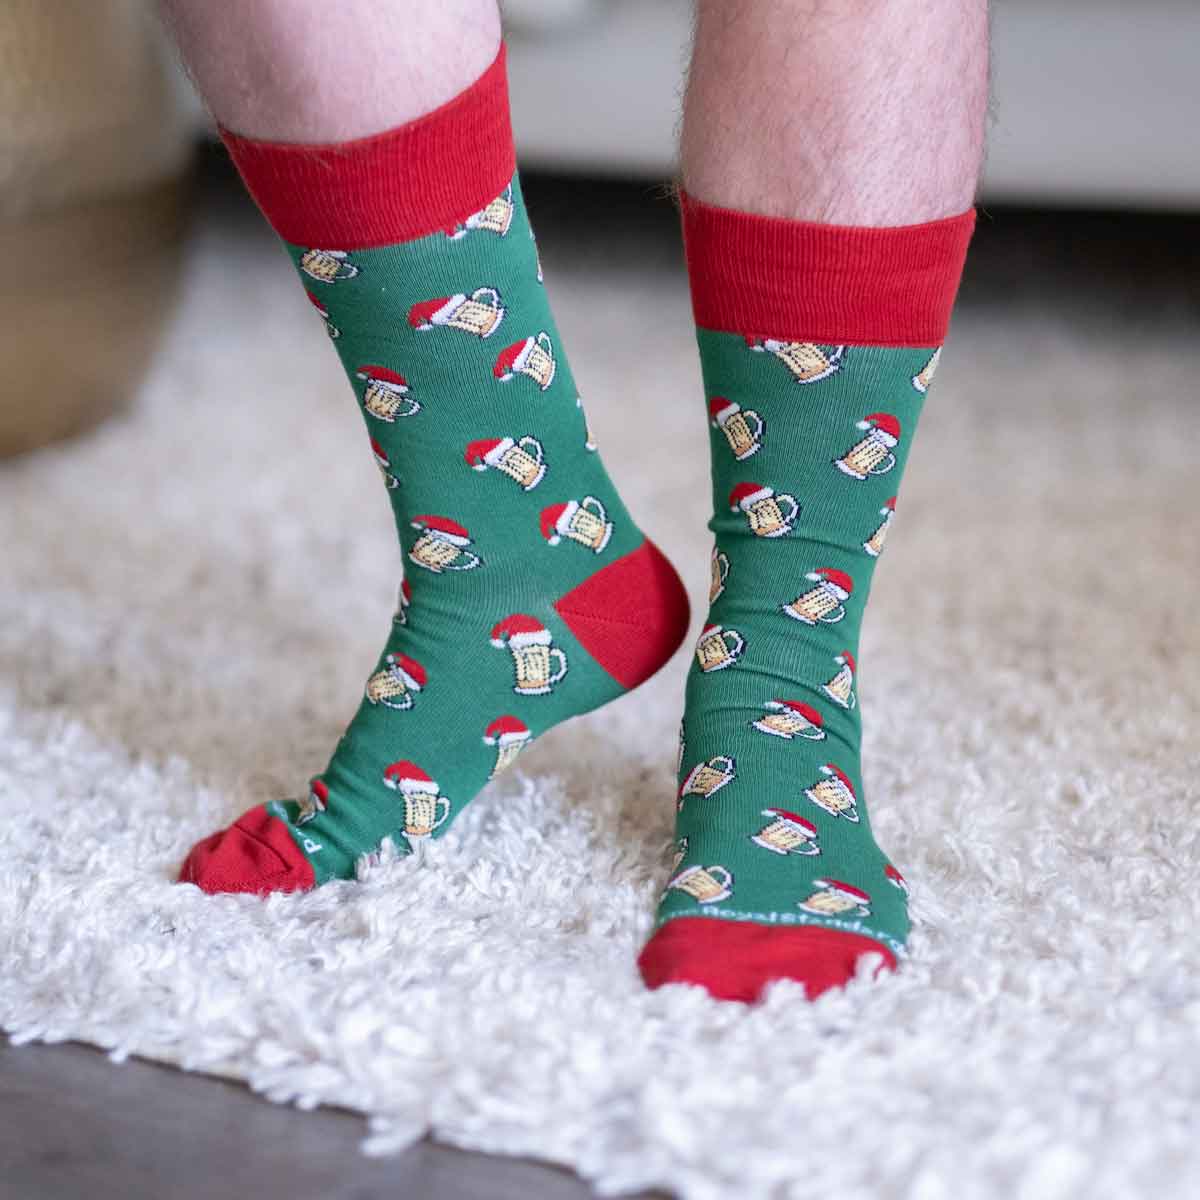 Men's Christmas Socks: Beer mug, Bulldog Santa and Nutcracker